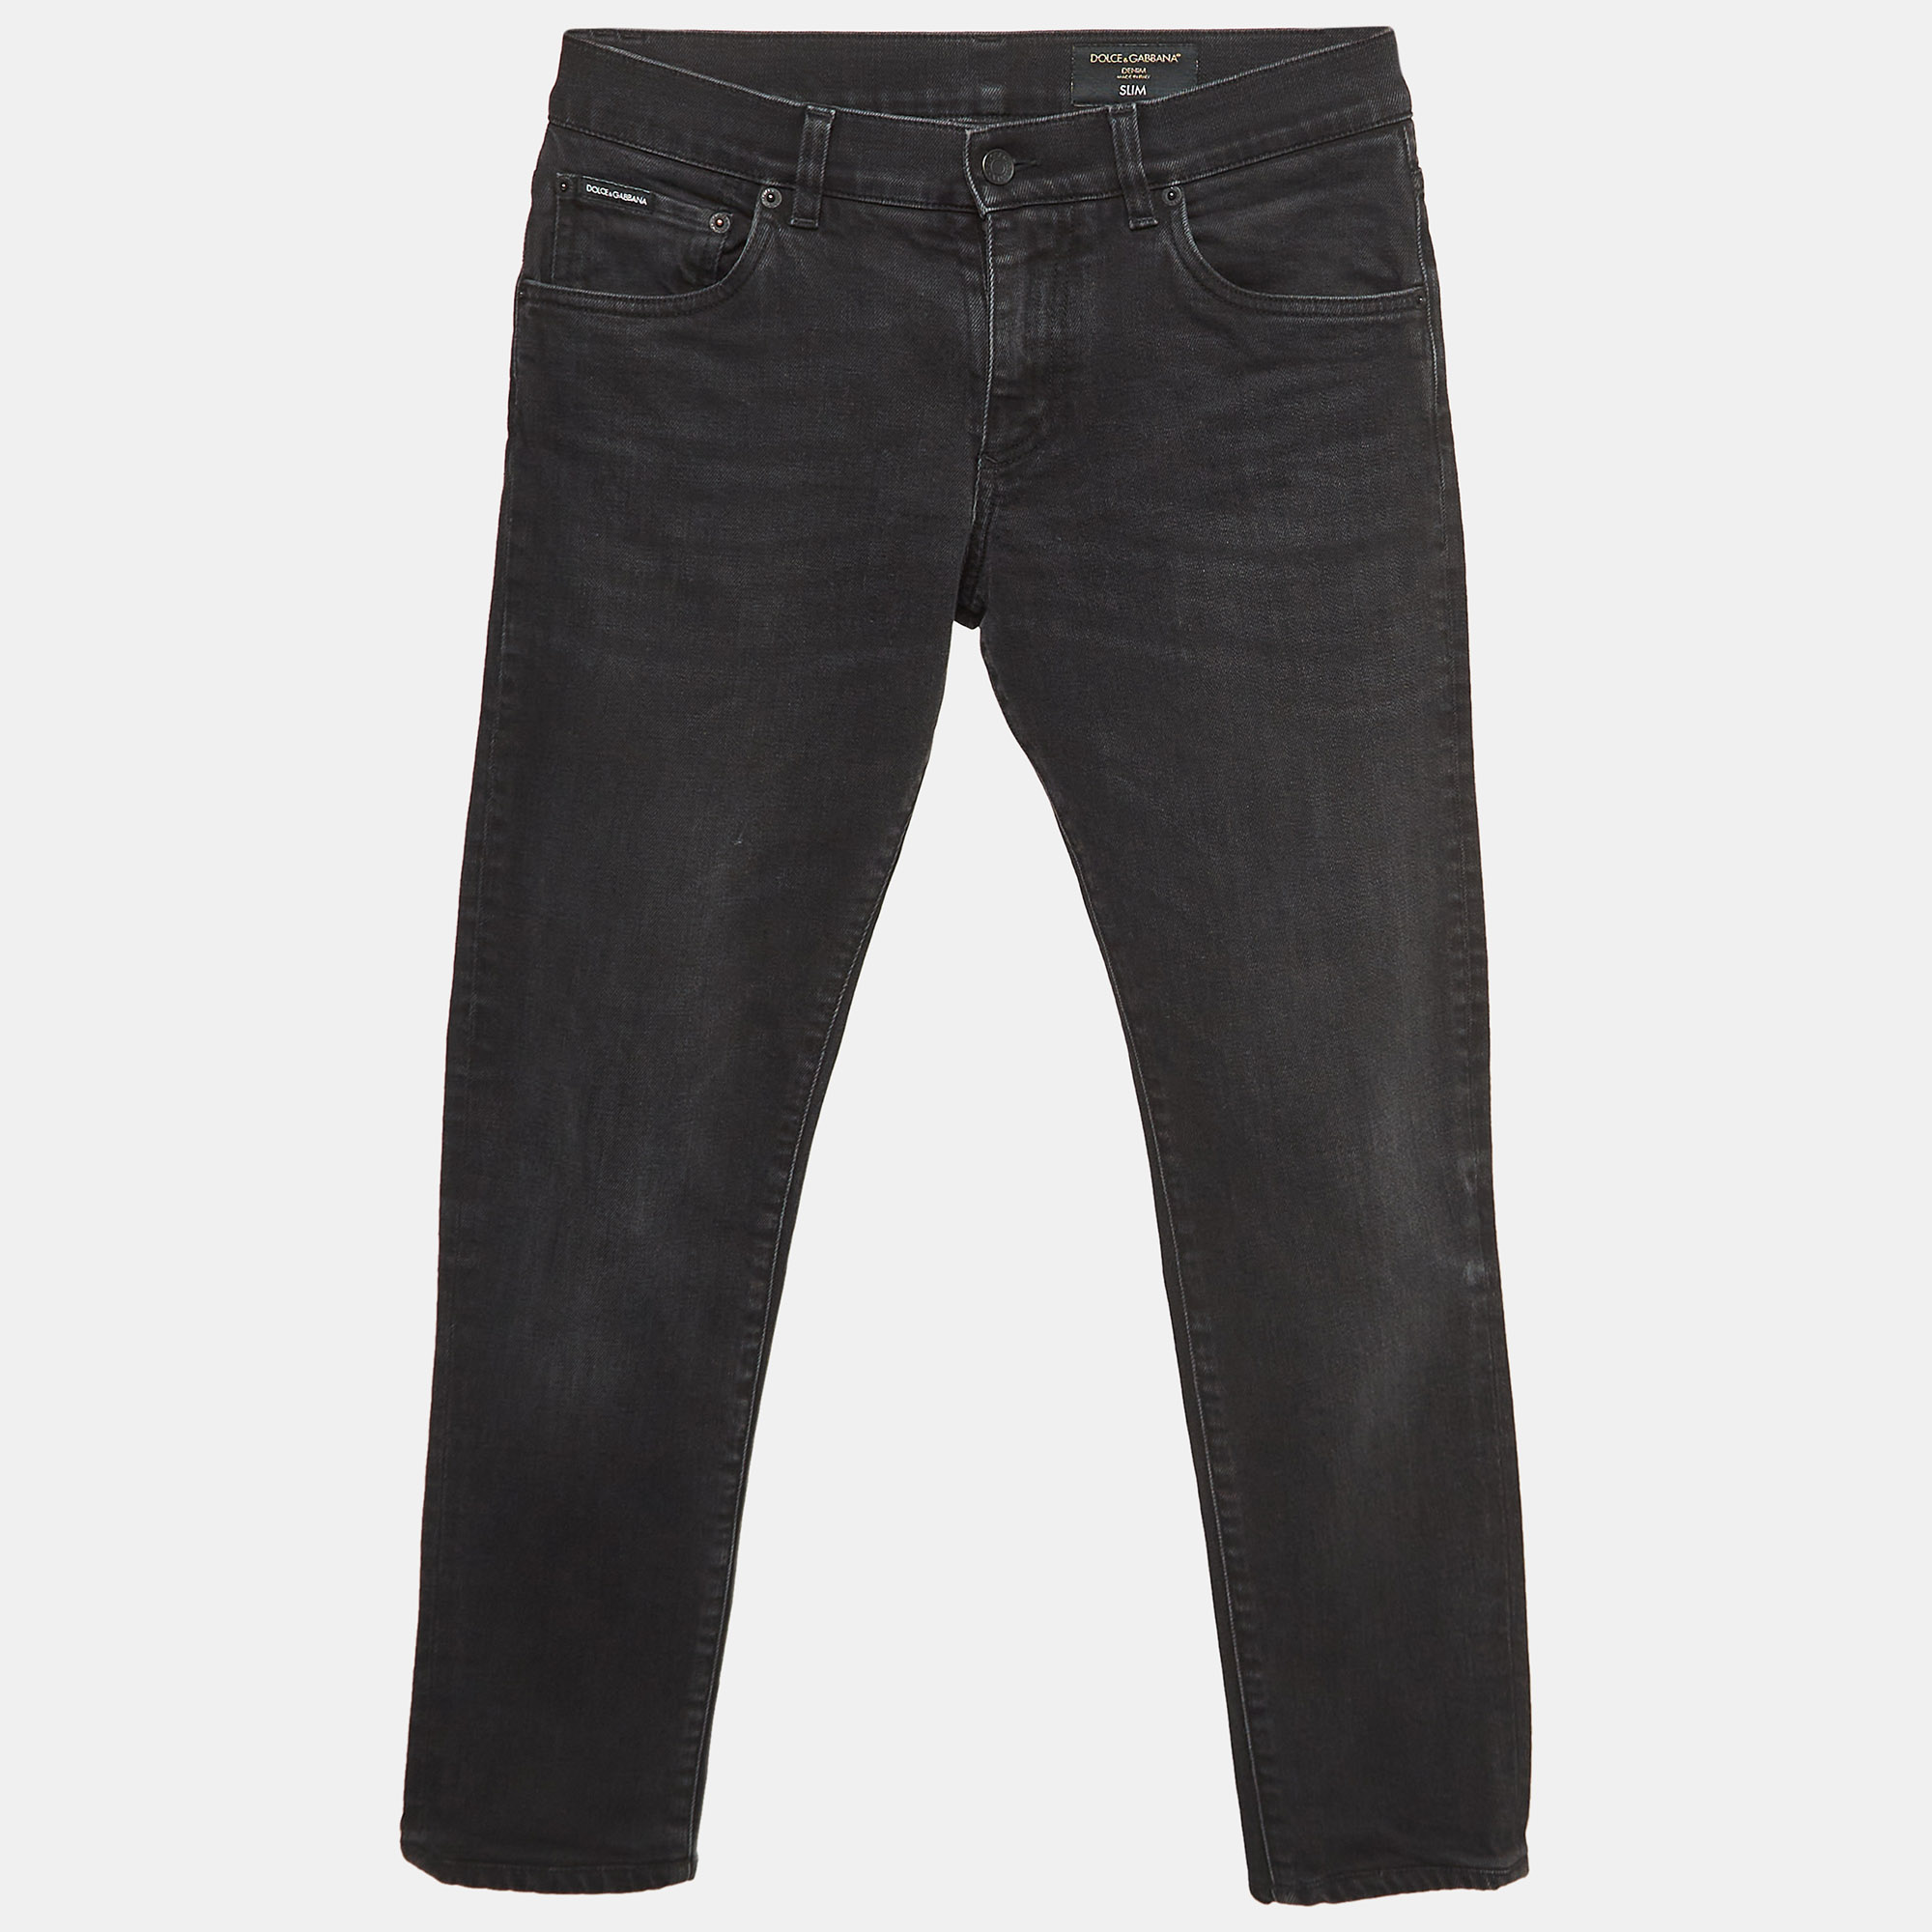 

Dolce & Gabbana Black Denim Slim Fit Jeans S Waist 32"